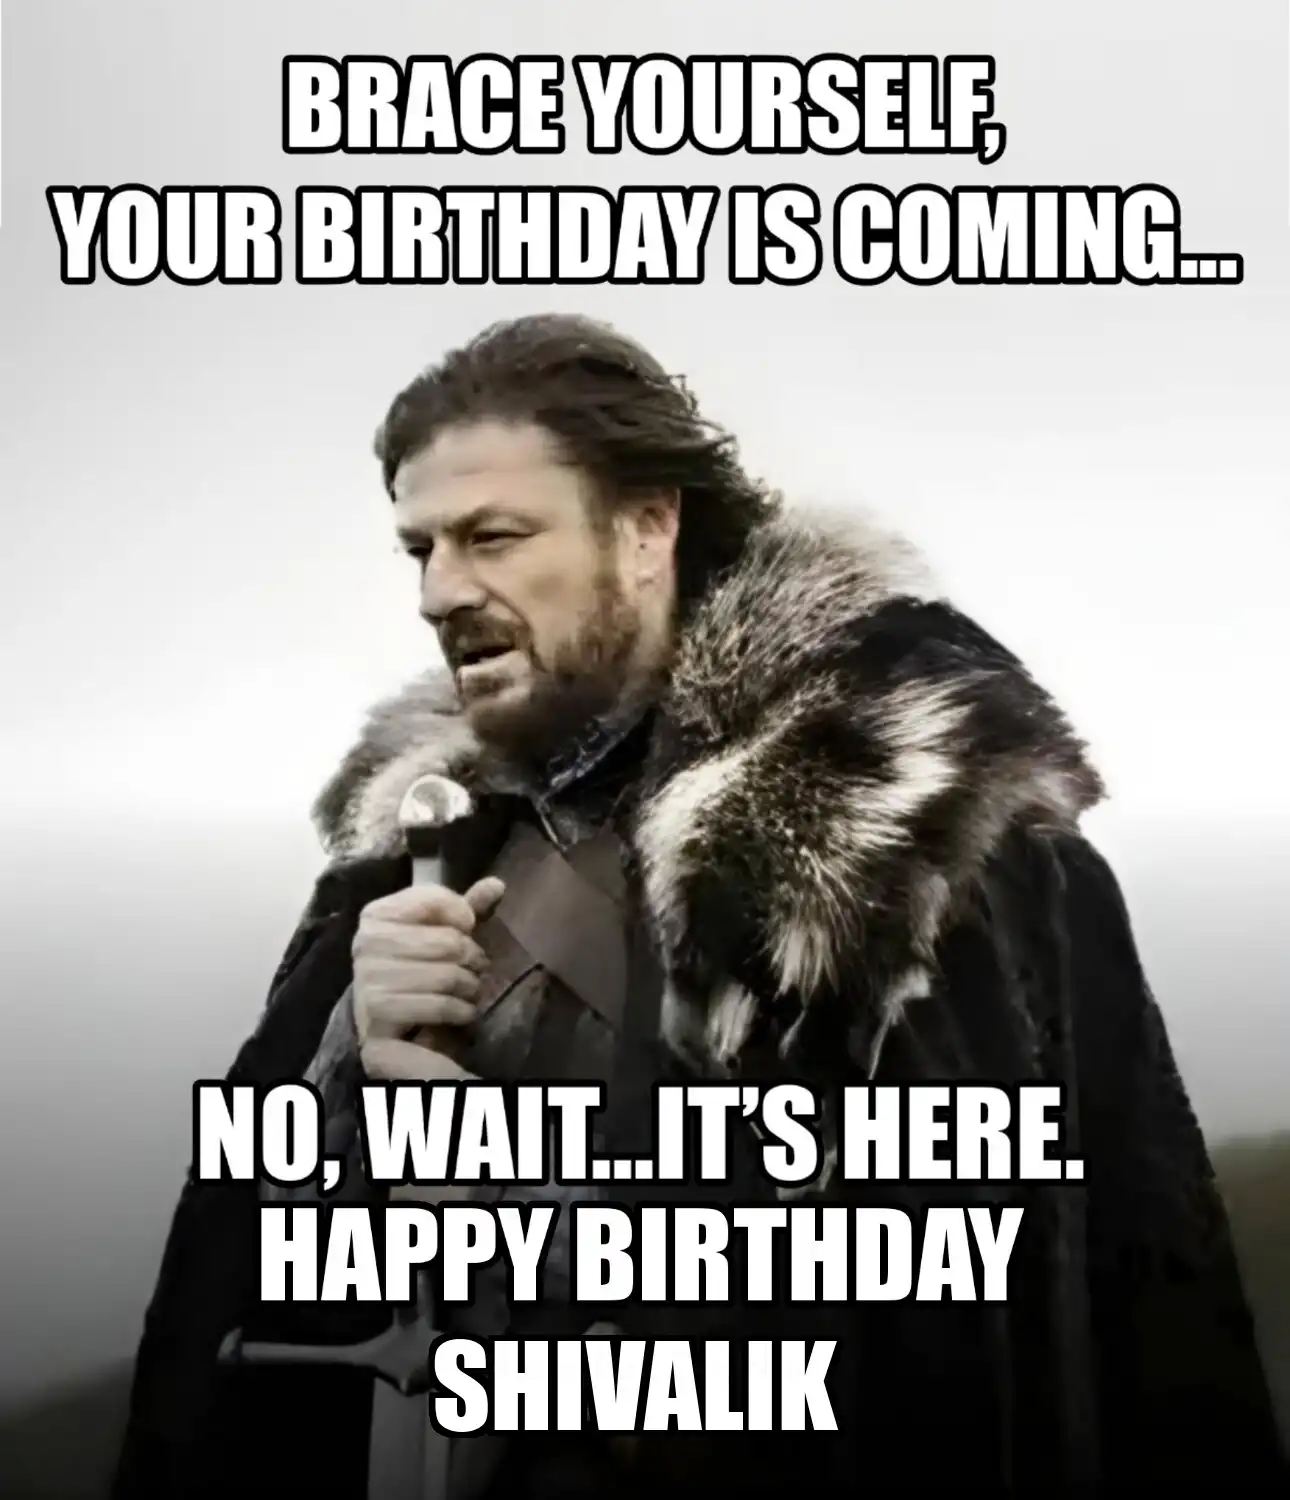 Happy Birthday Shivalik Brace Yourself Your Birthday Is Coming Meme